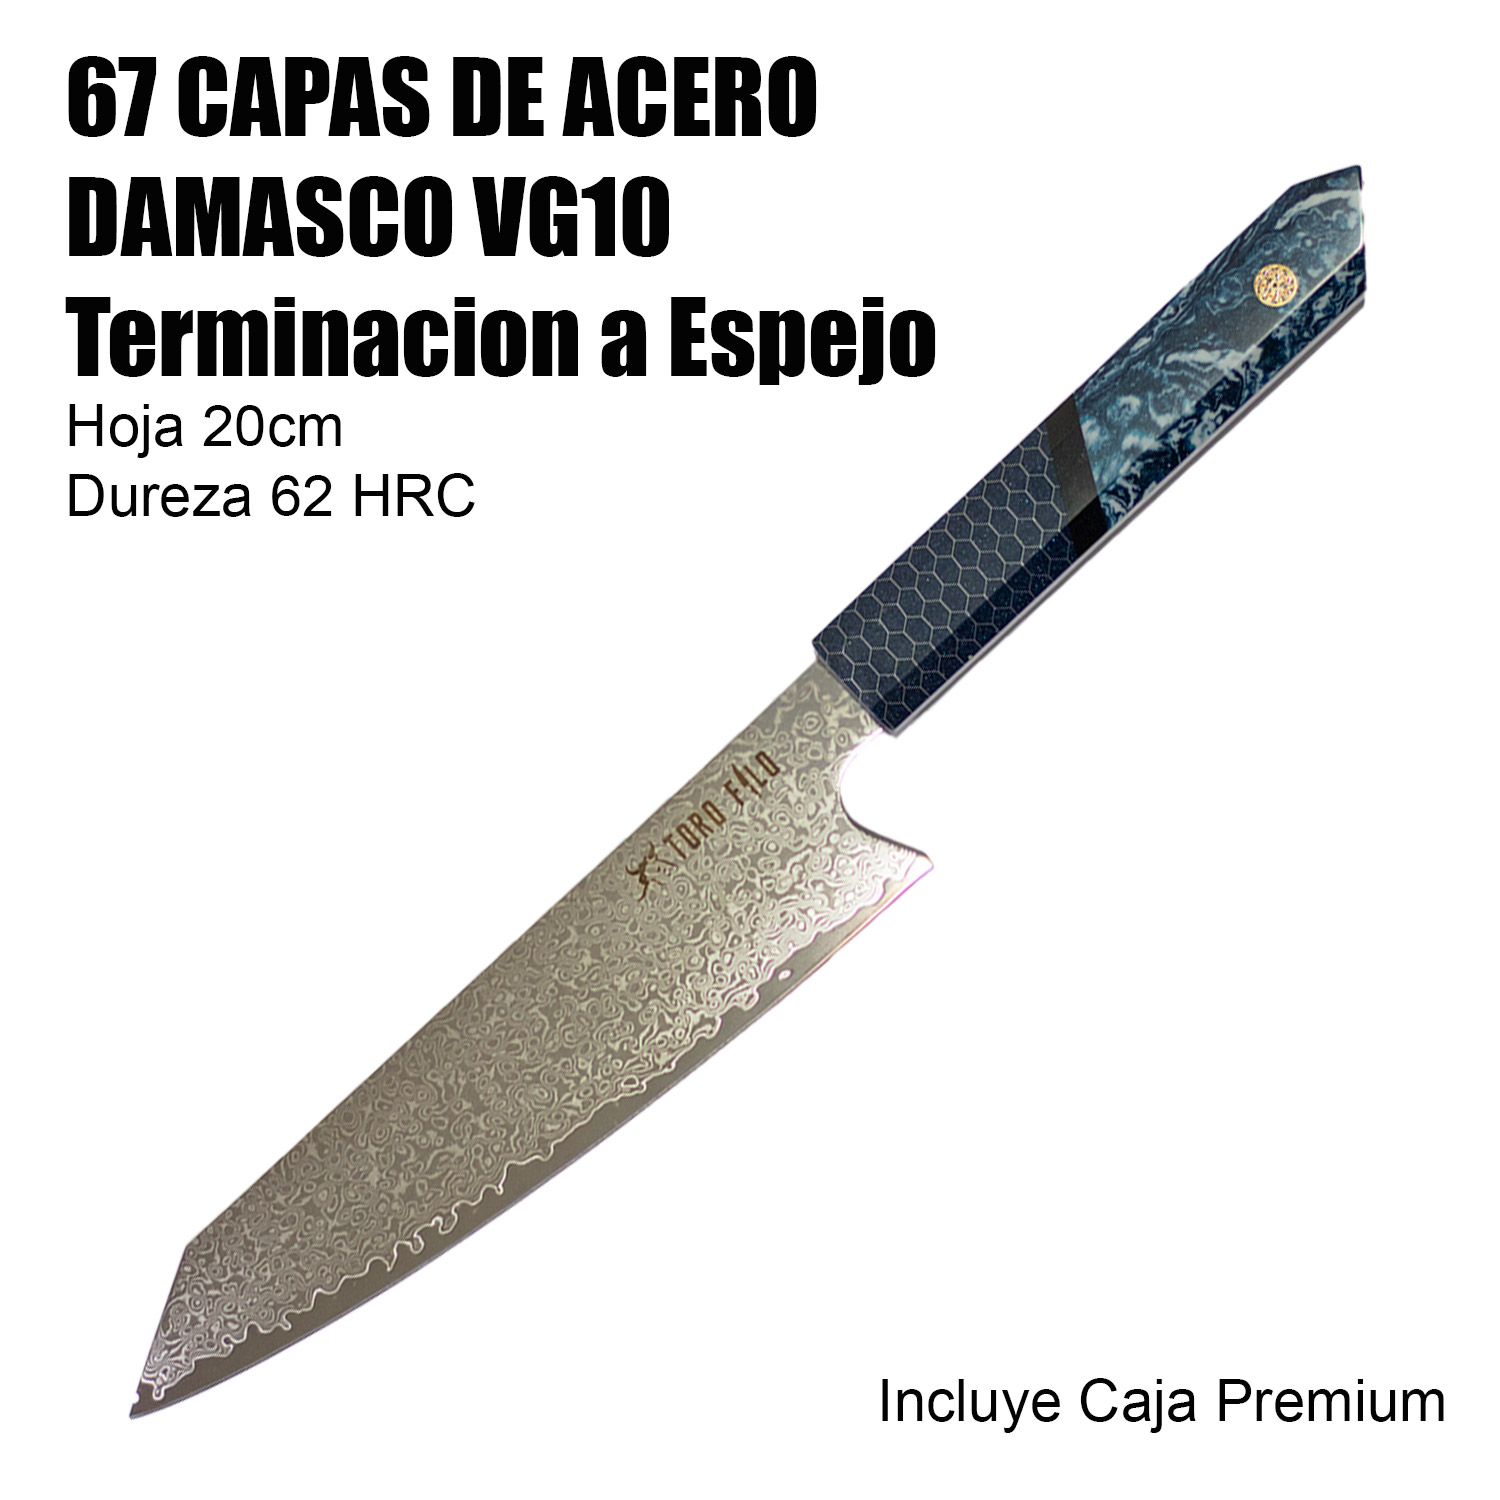 Cuchillo SERIES 2 Japonés de Acero de Damasco 67 CAPAS VG-10